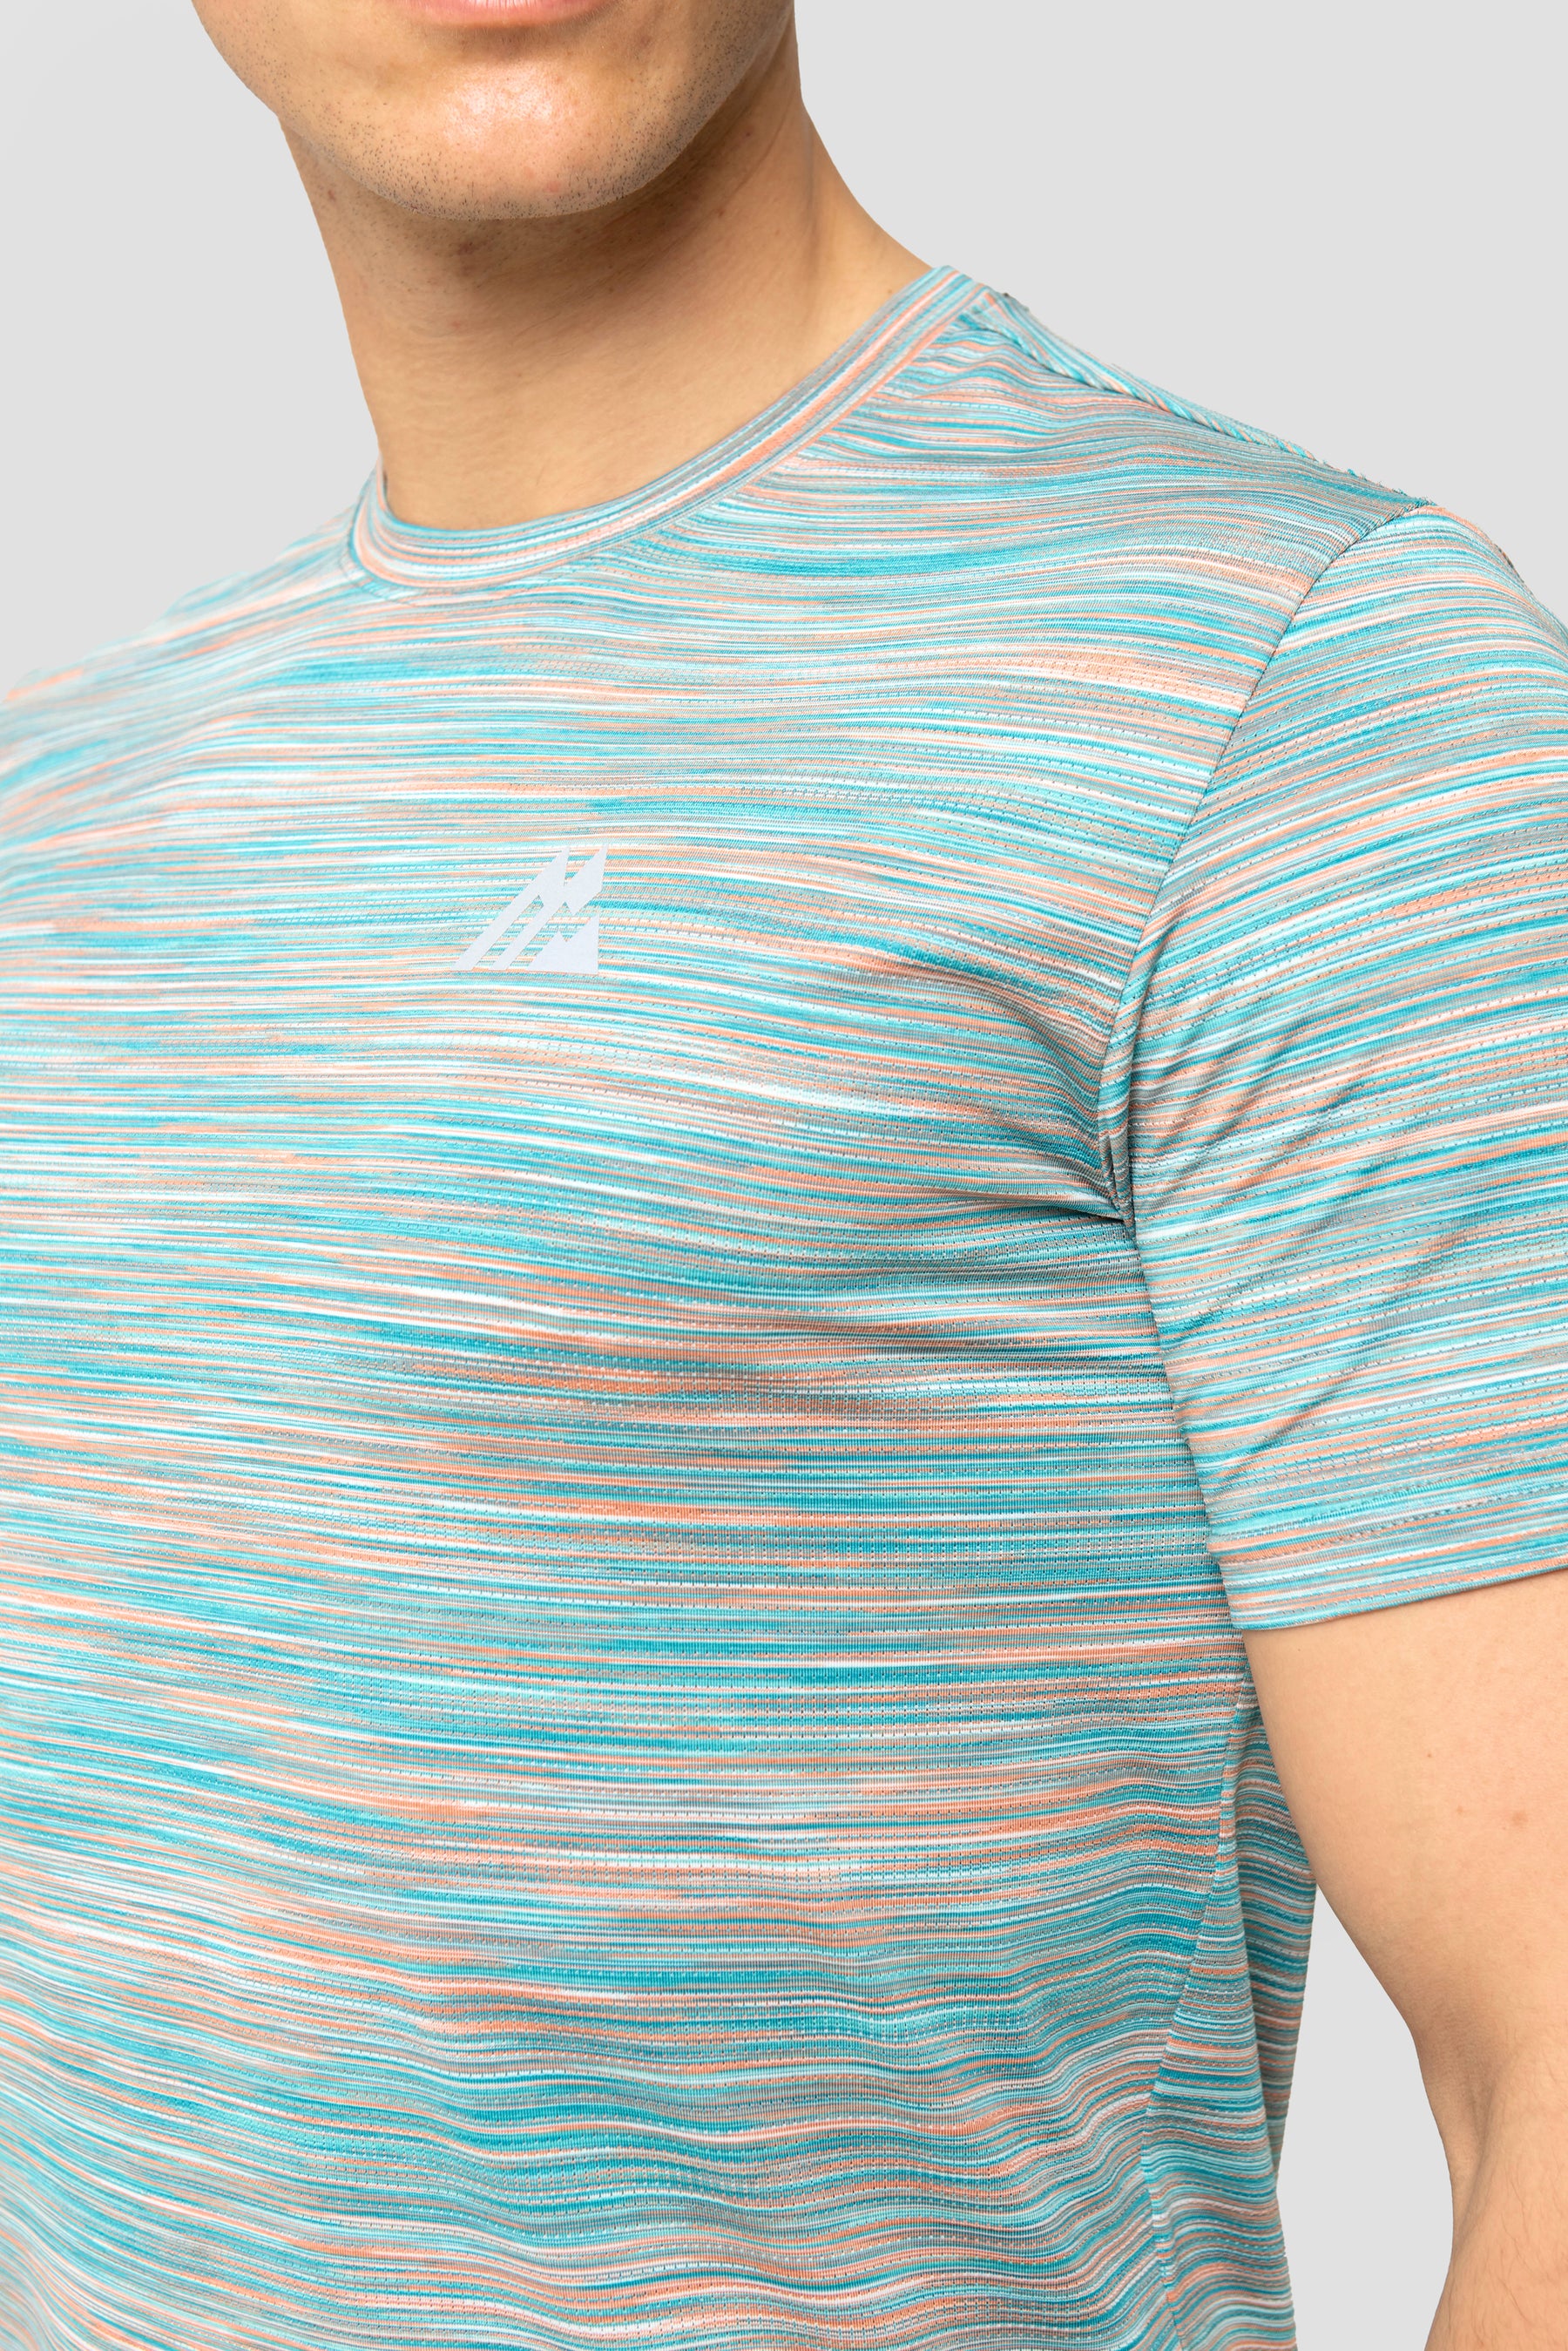 Trail 2.0 T-Shirt - Aqua/Orange - Montirex